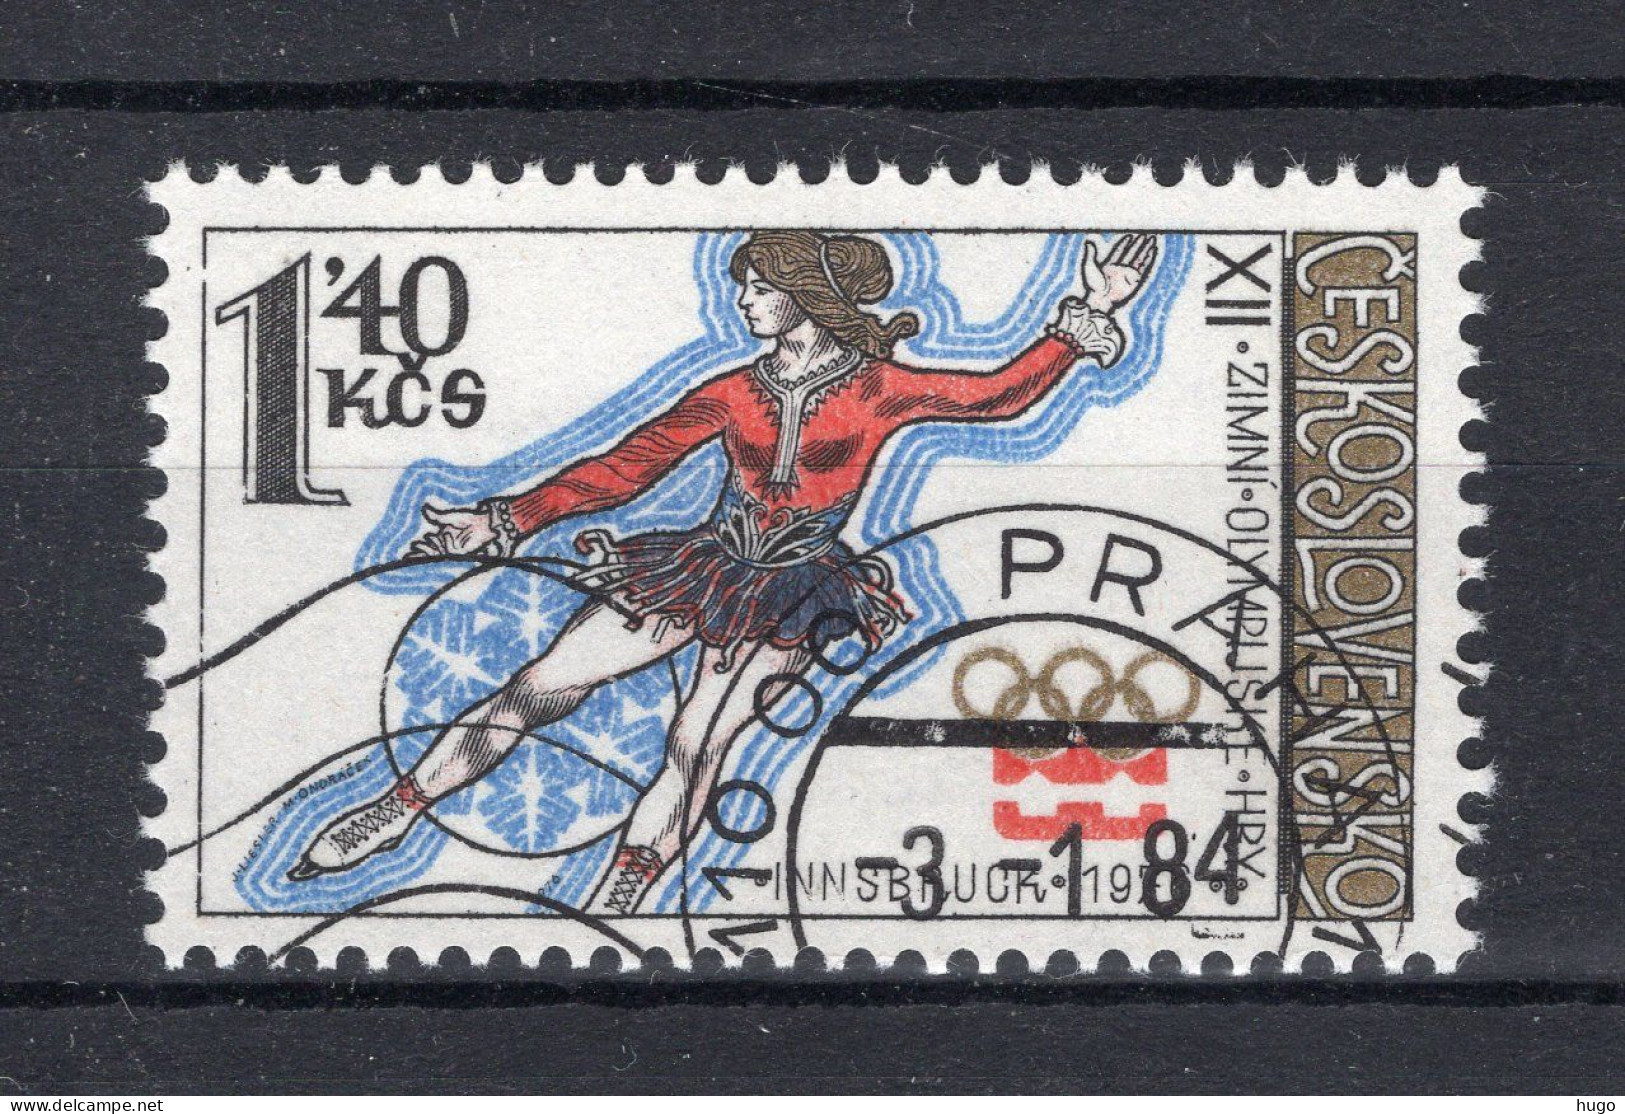 TSJECHOSLOVAKIJE Yt. 2150° Gestempeld 1976 - Used Stamps